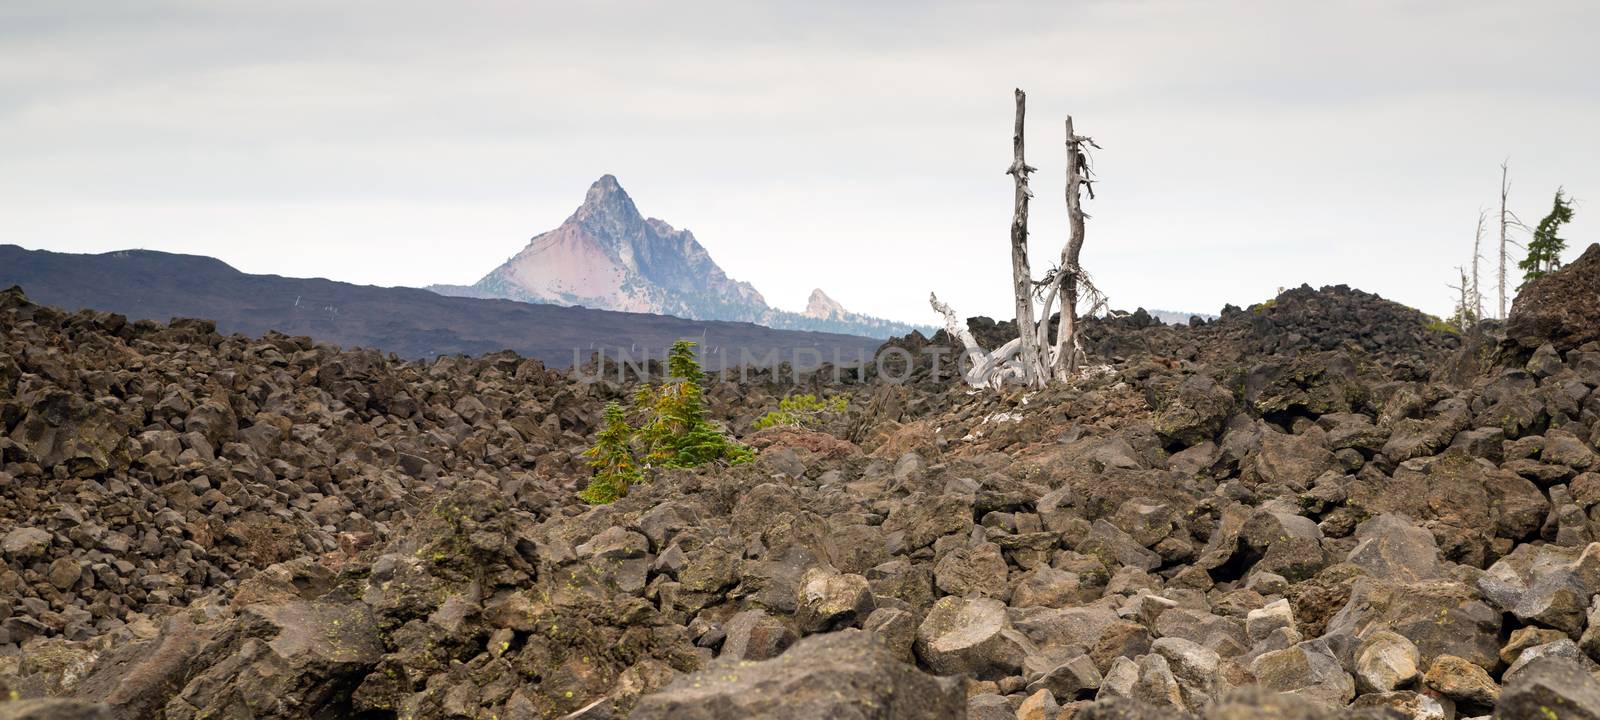 Mckenzie Pass Mt Washington Cascade Range Ancient Lava Field by ChrisBoswell